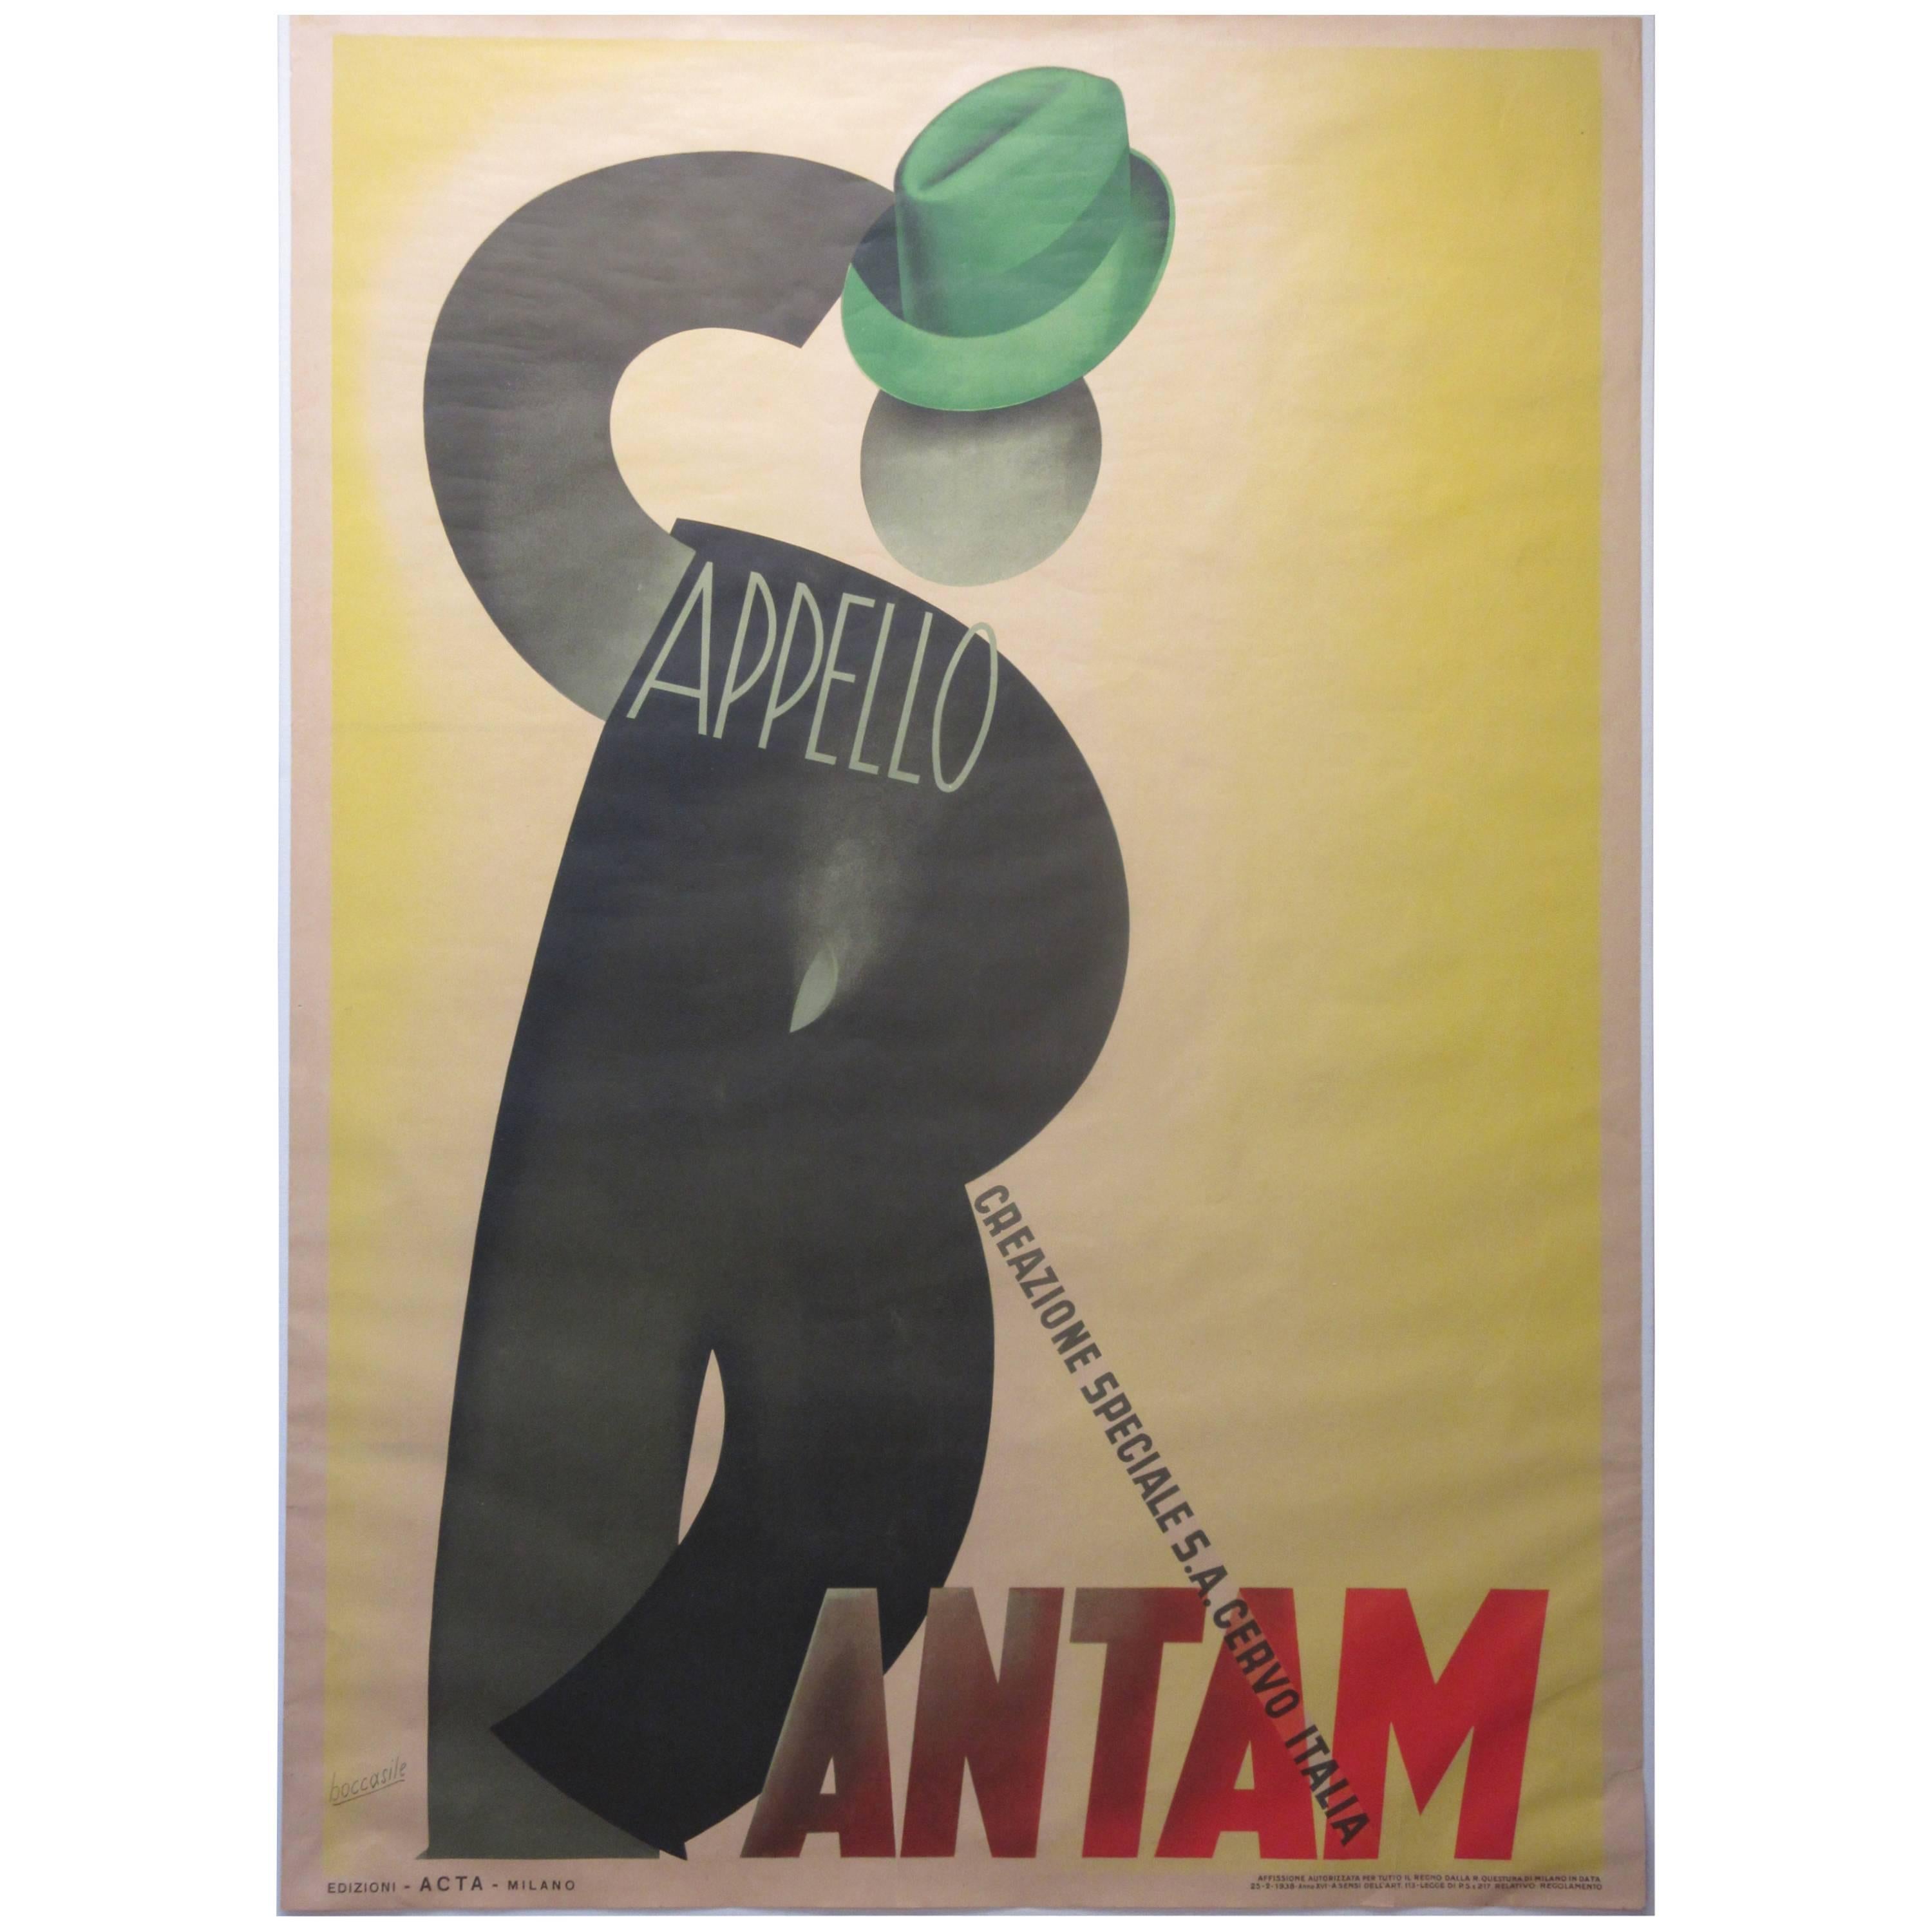 Gino Boccasile Cappello Bantam Poster, 1938